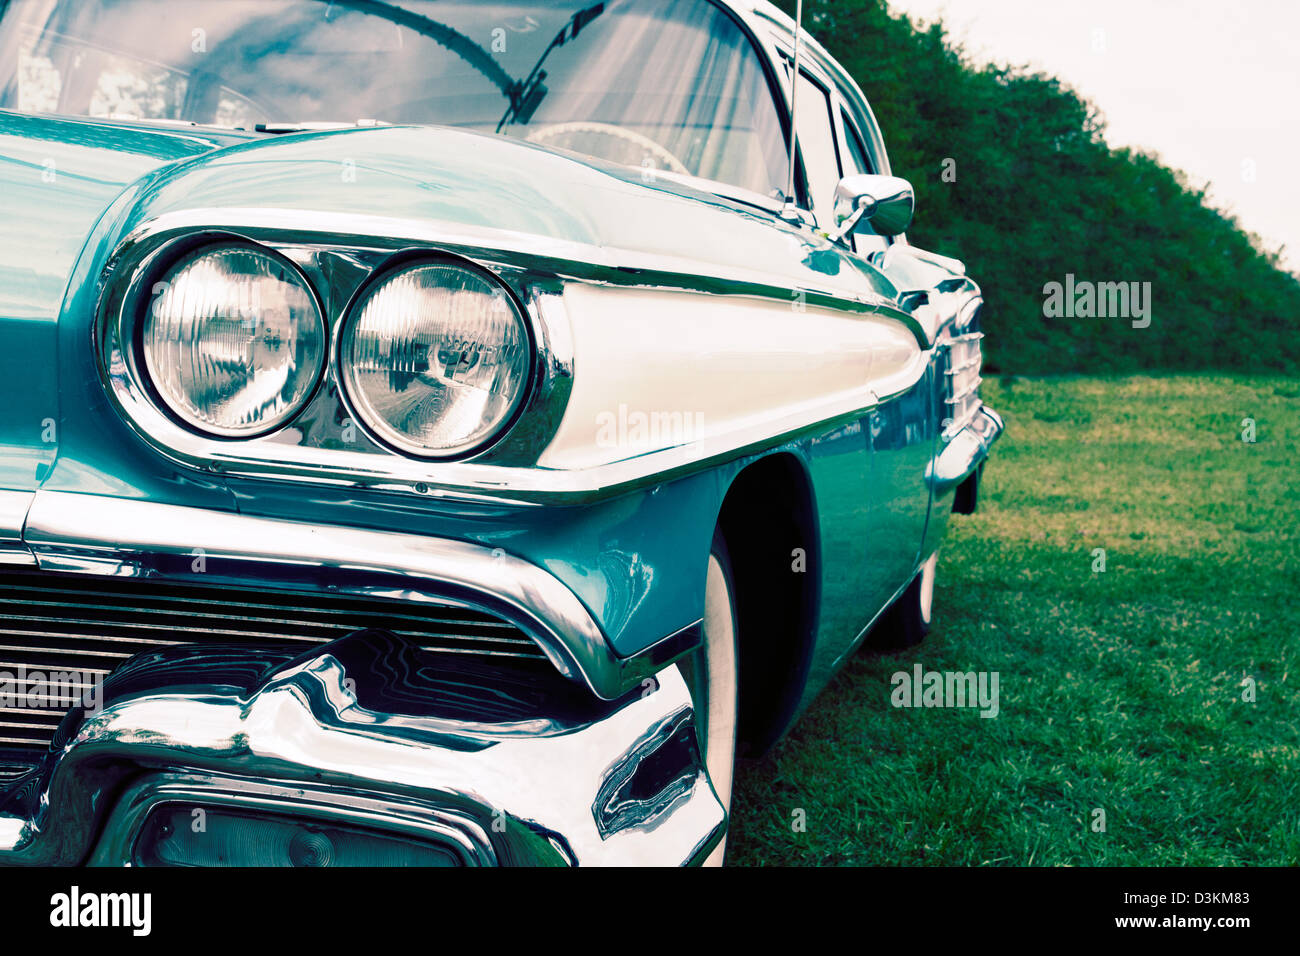 Classic car close up Stock Photo